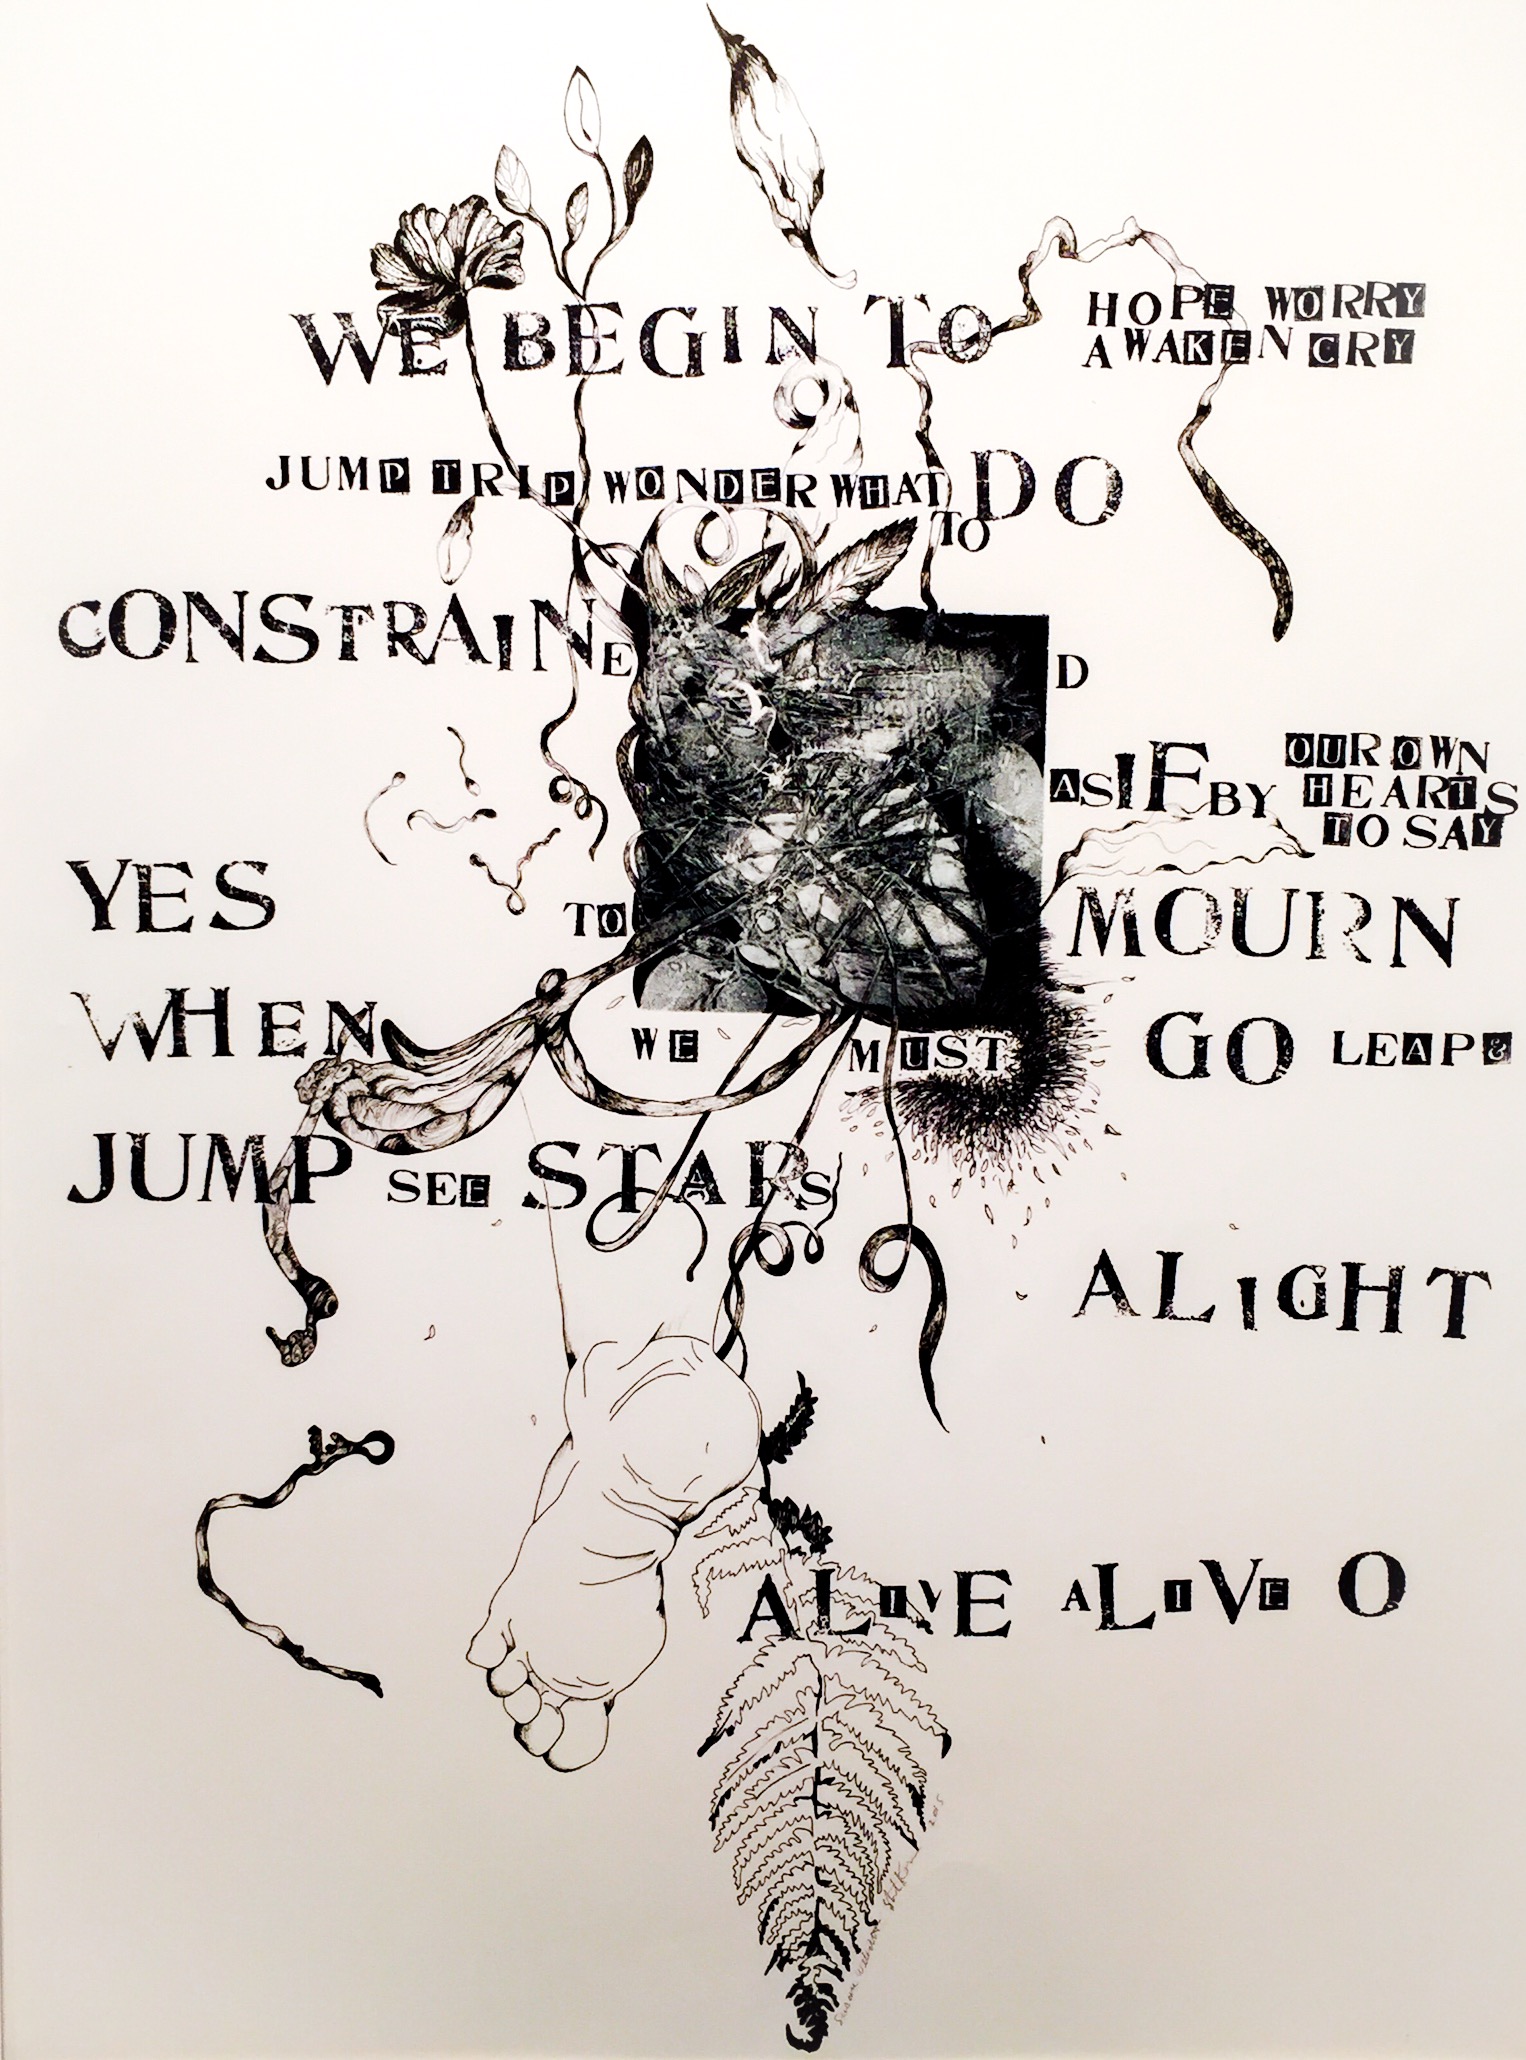   Alight   23 x 30 inches  mixed media  image: Susan Webster   hand stamped text:Stuart Kestenbaum   2015 